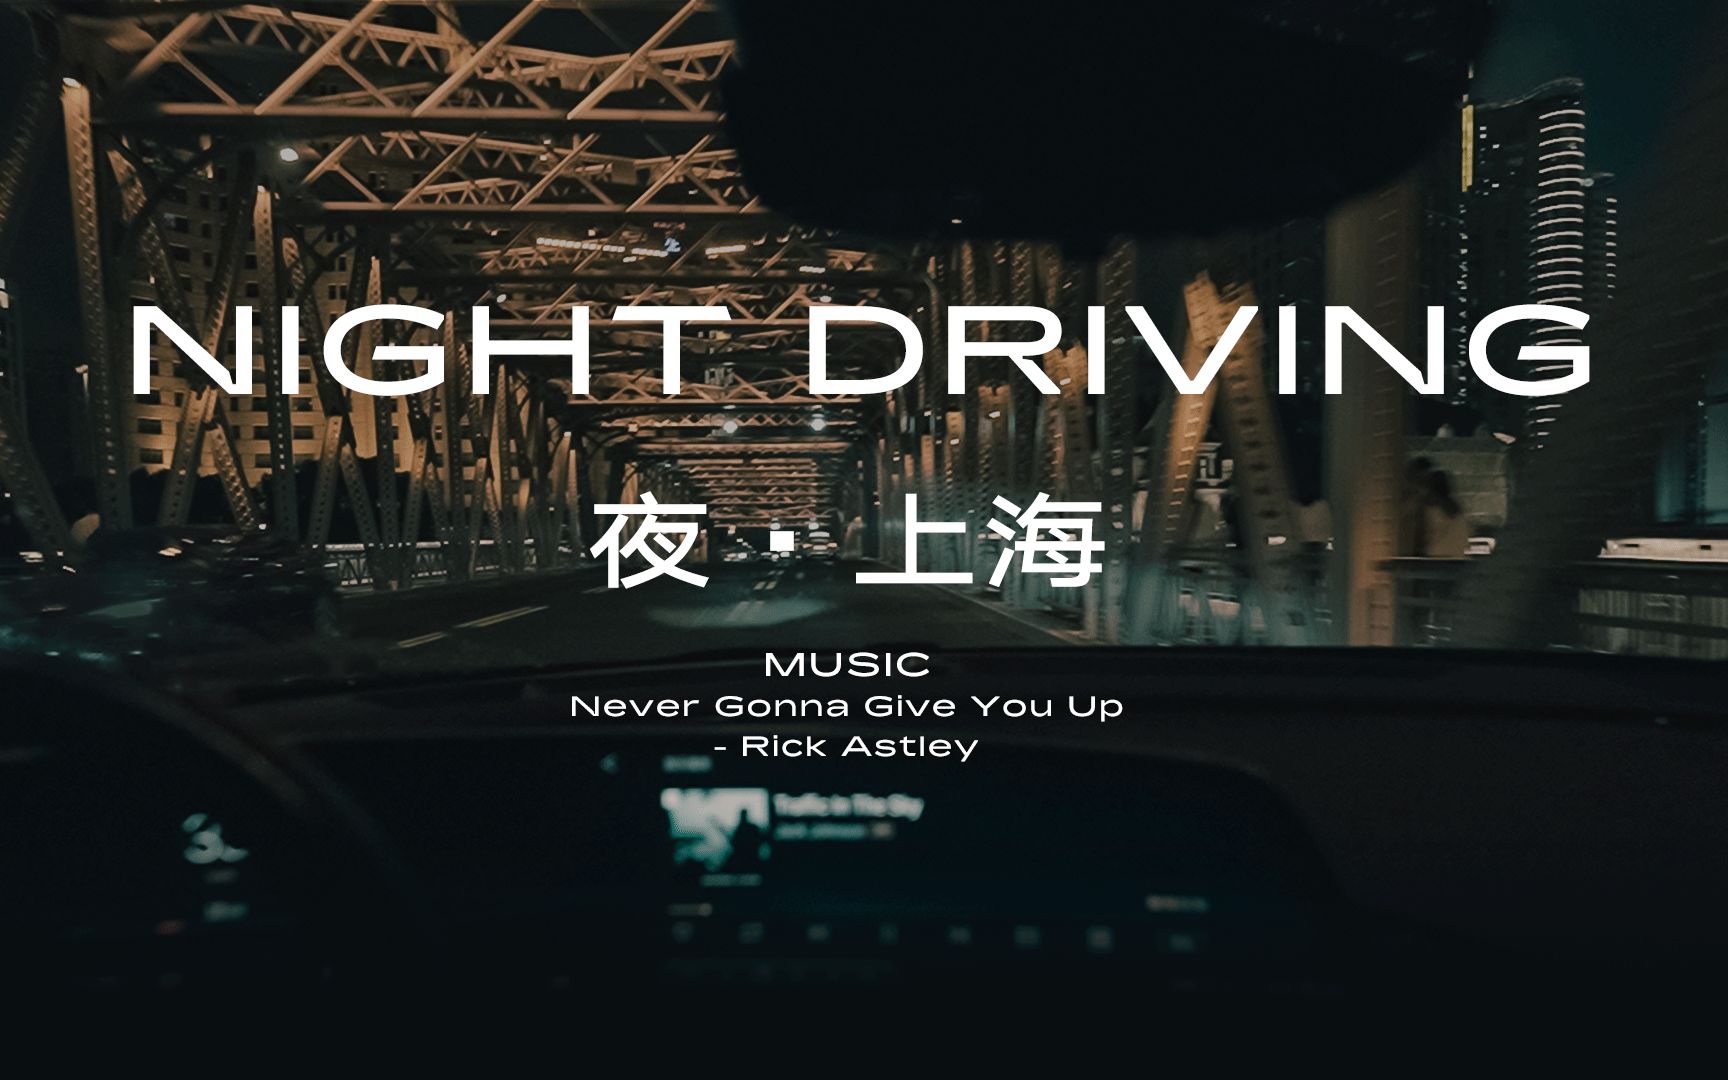 【NIGHT DRIVING】第一视角驾车听歌 | 沉浸式感受上海外滩高架夜景